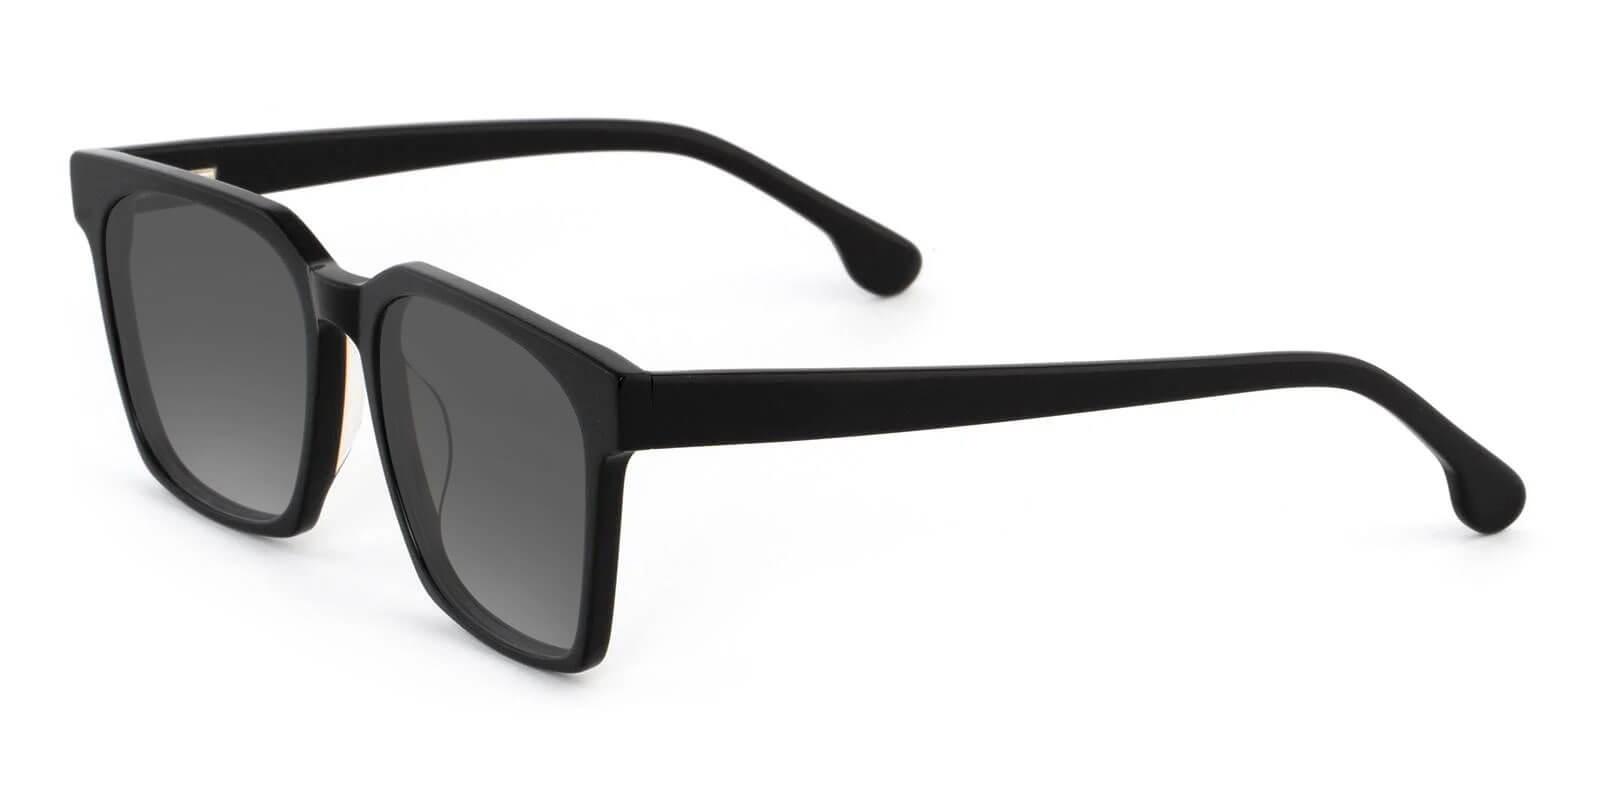 Nala Black Acetate SpringHinges , Sunglasses , UniversalBridgeFit Frames from ABBE Glasses